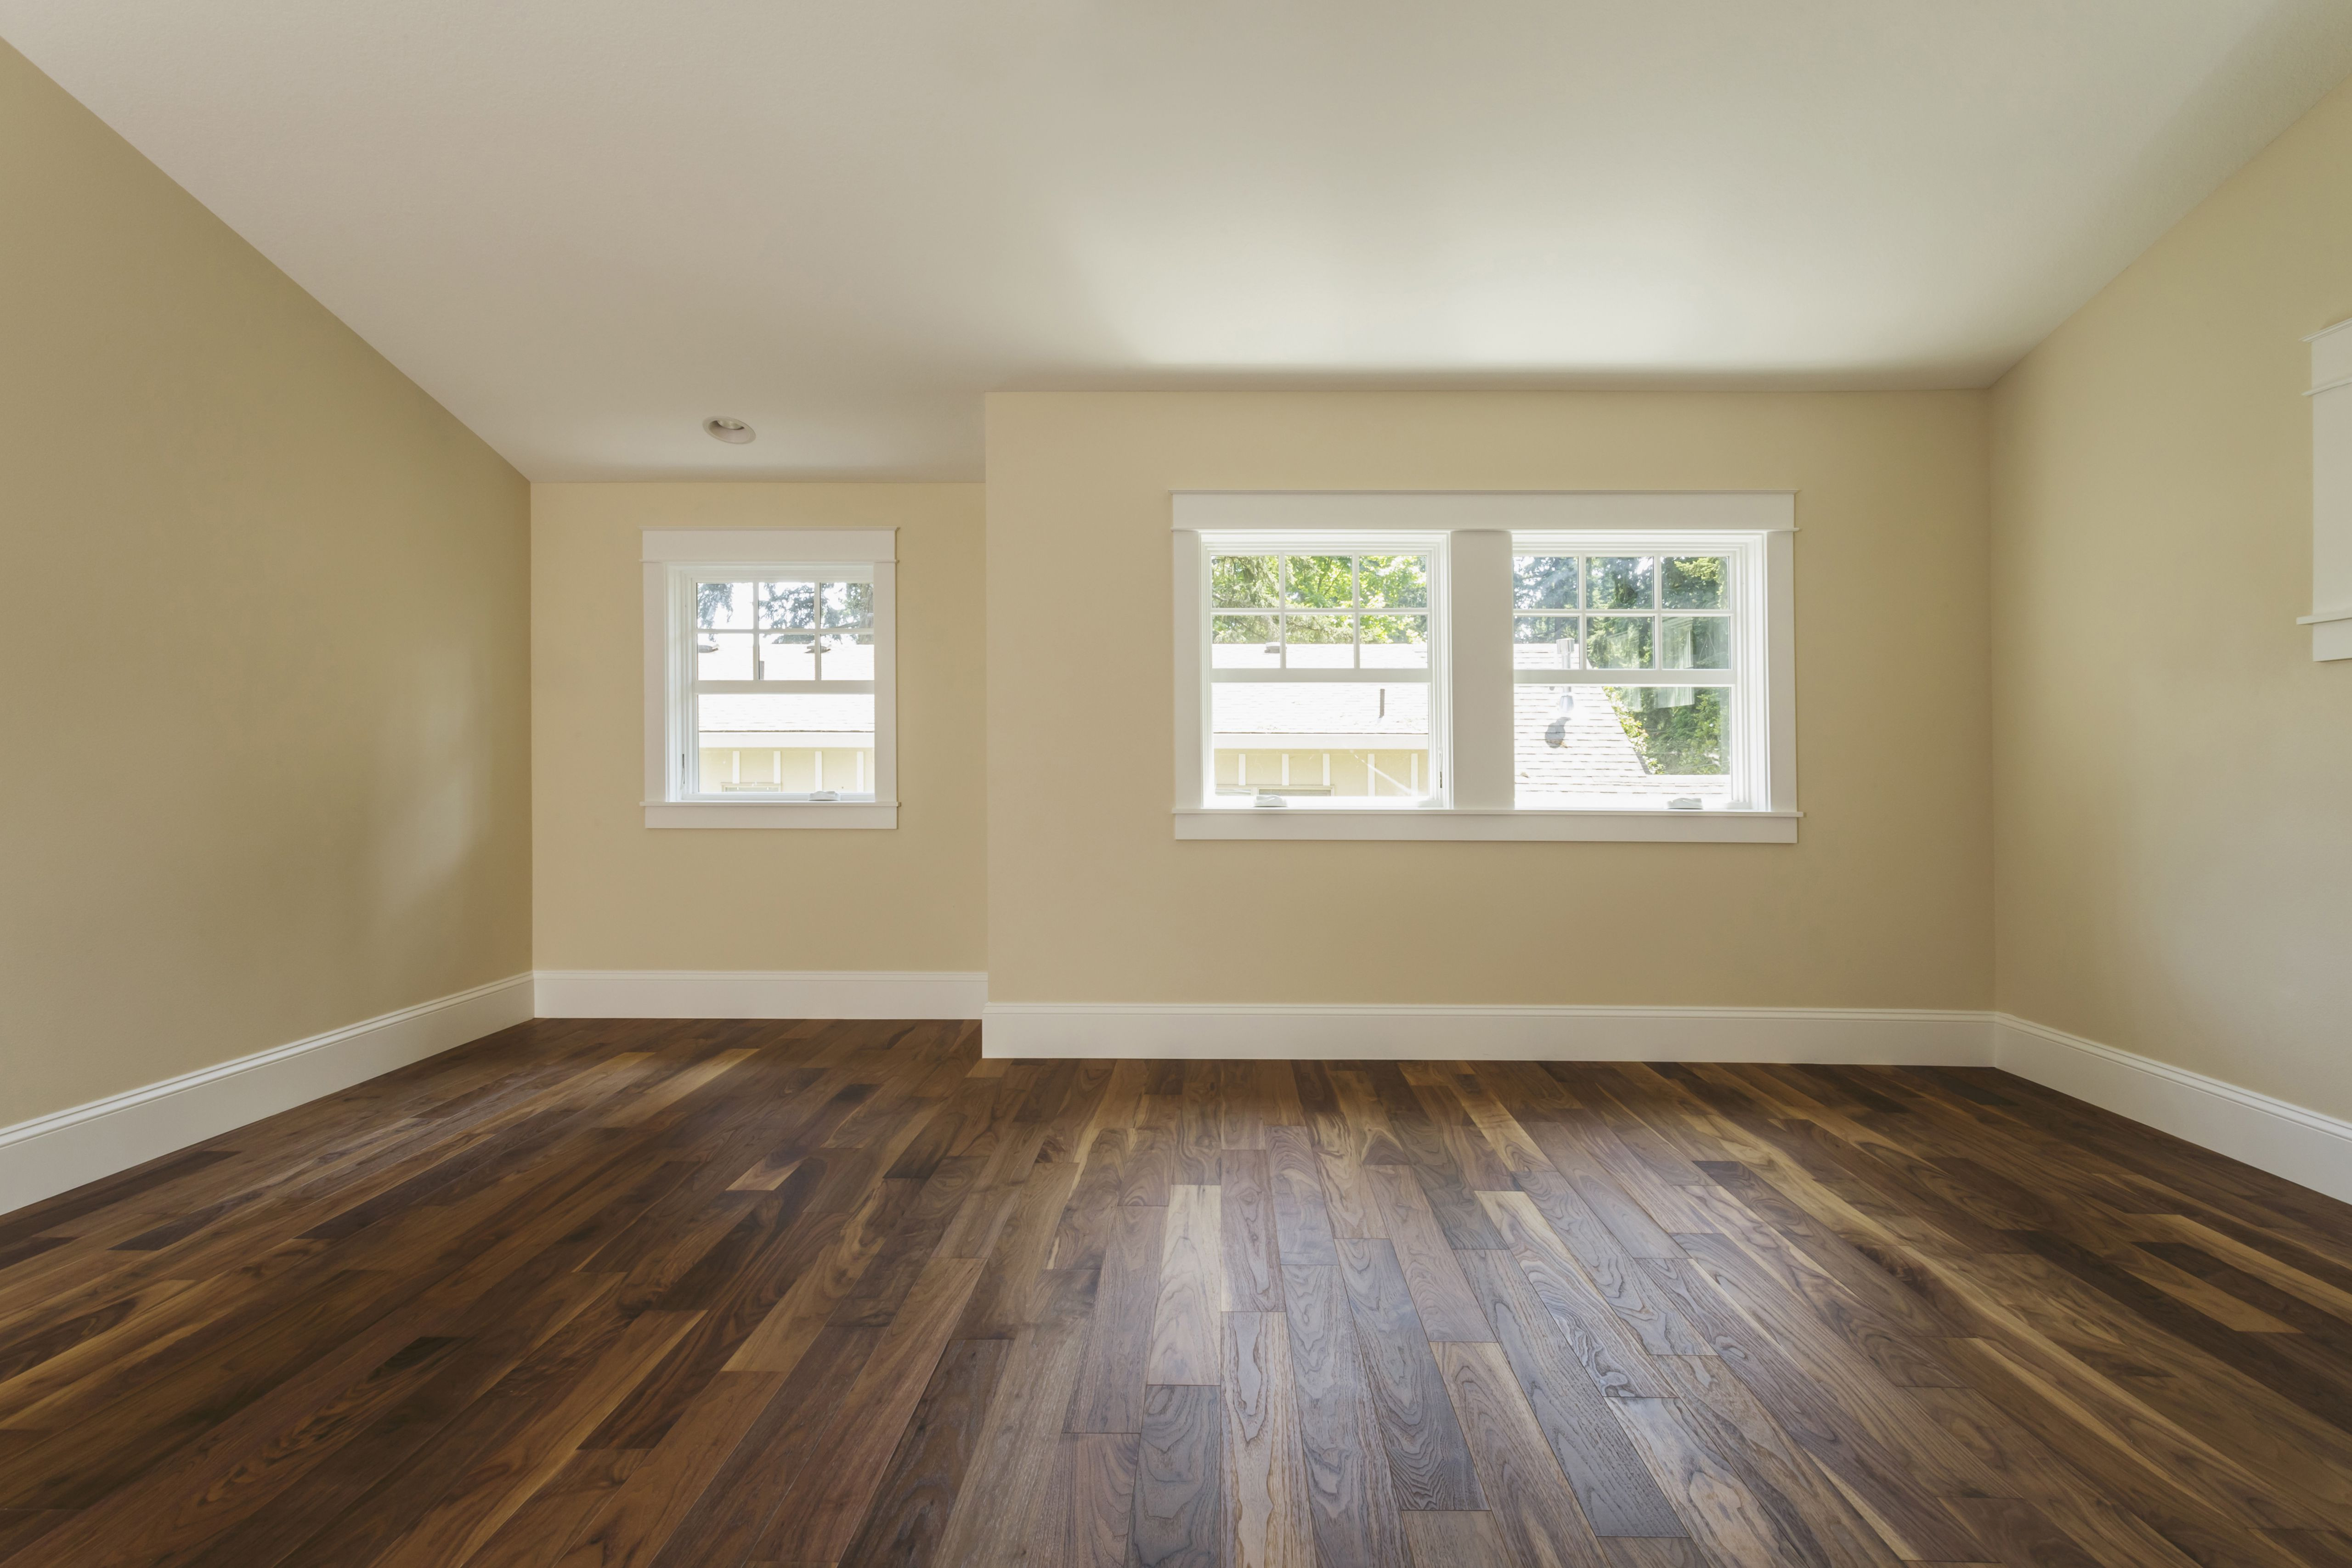 installing engineered hardwood flooring over vinyl of its easy and fast to install plank vinyl flooring pertaining to wooden floor in empty bedroom 482143001 588bd5f45f9b5874eebd56e9